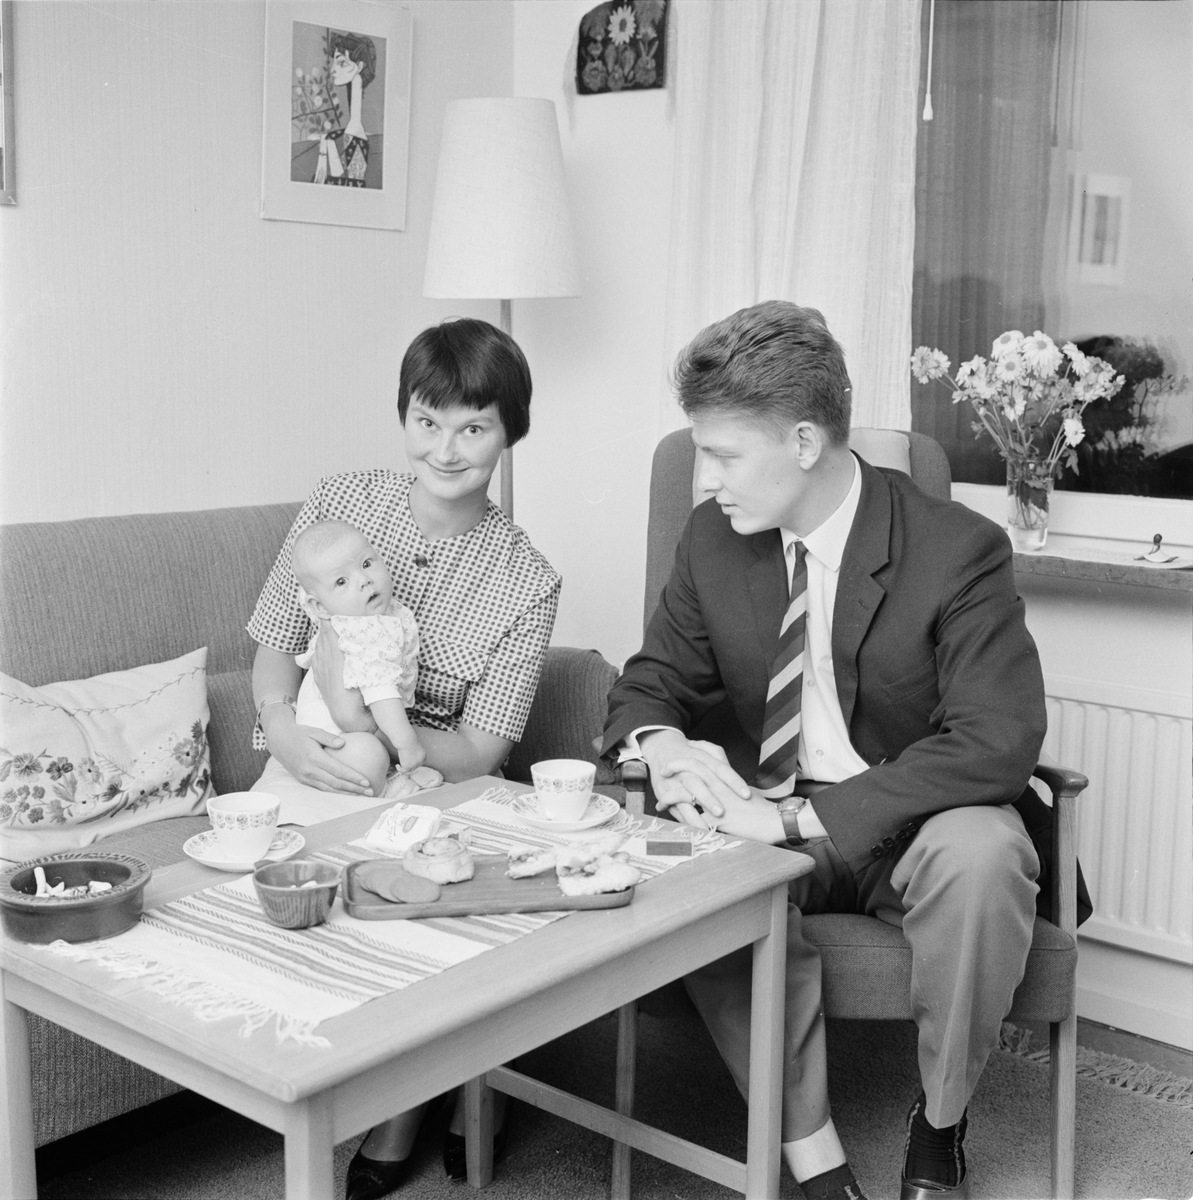 Studentliv - familj, Uppsala 1961